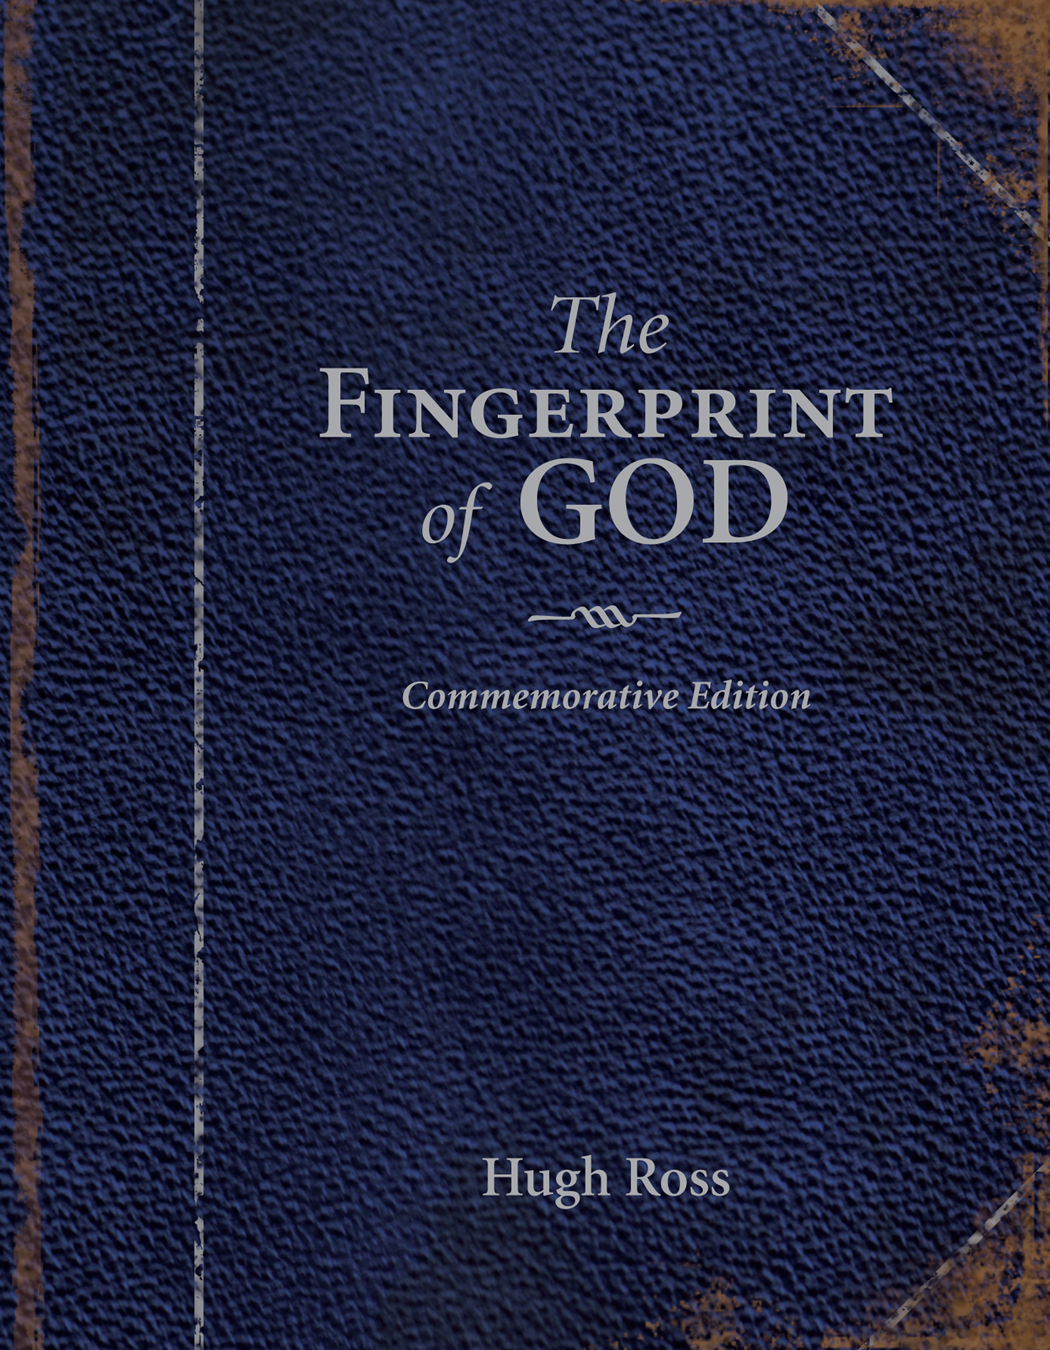 Fingerprint of God (Commemorative Edition) Image